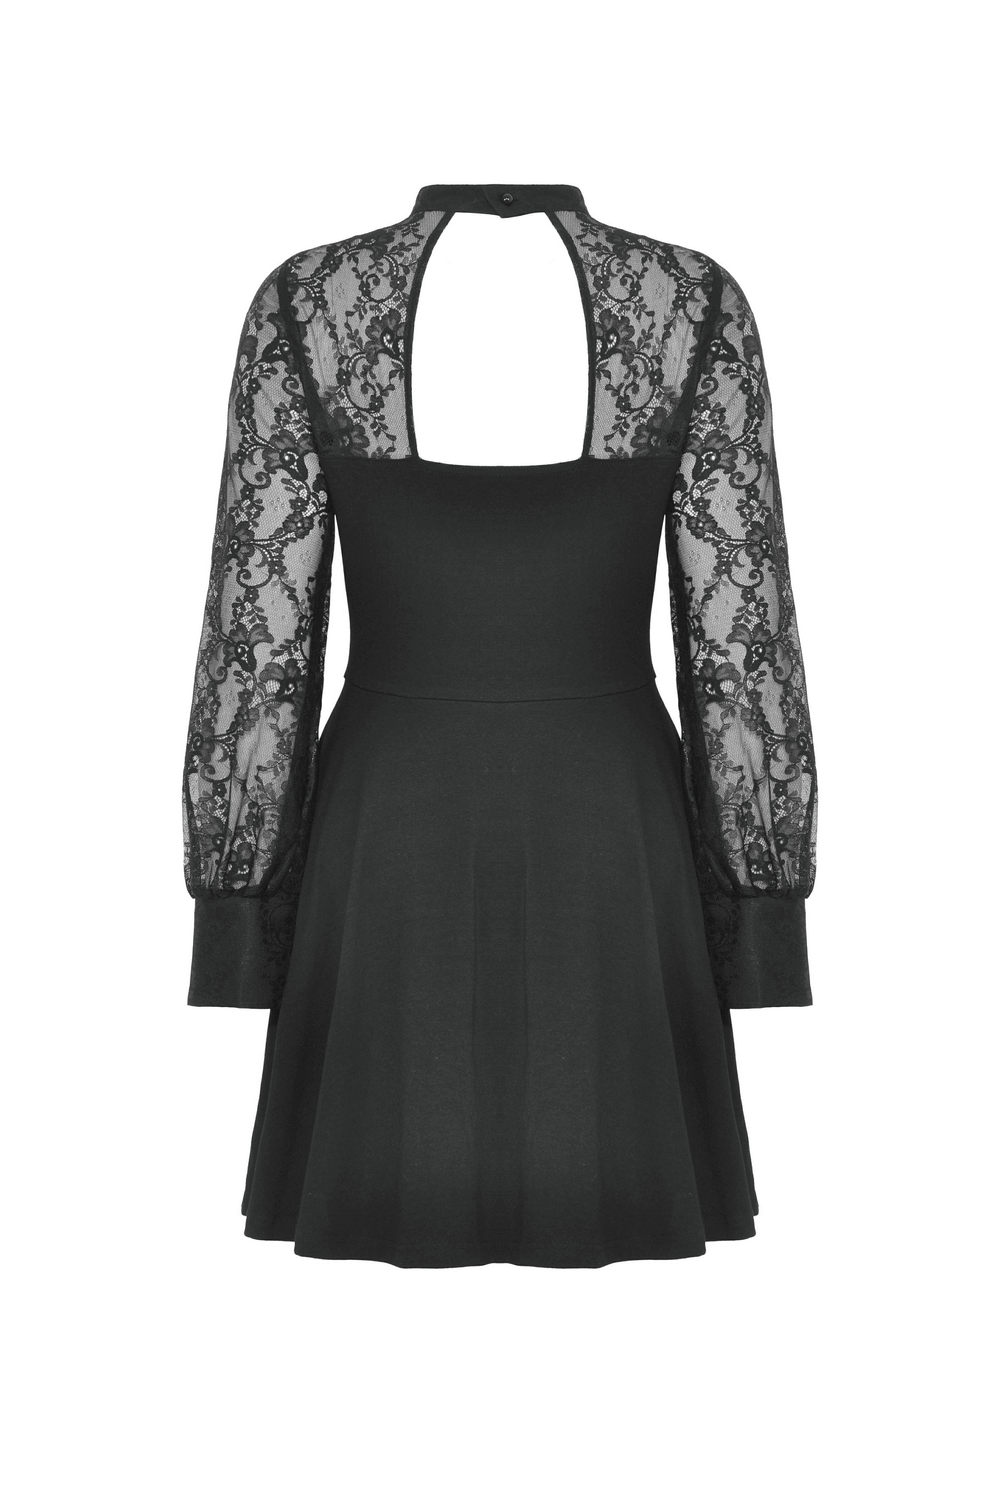 Elegant Women's Lace Black Dress with Floral Detail